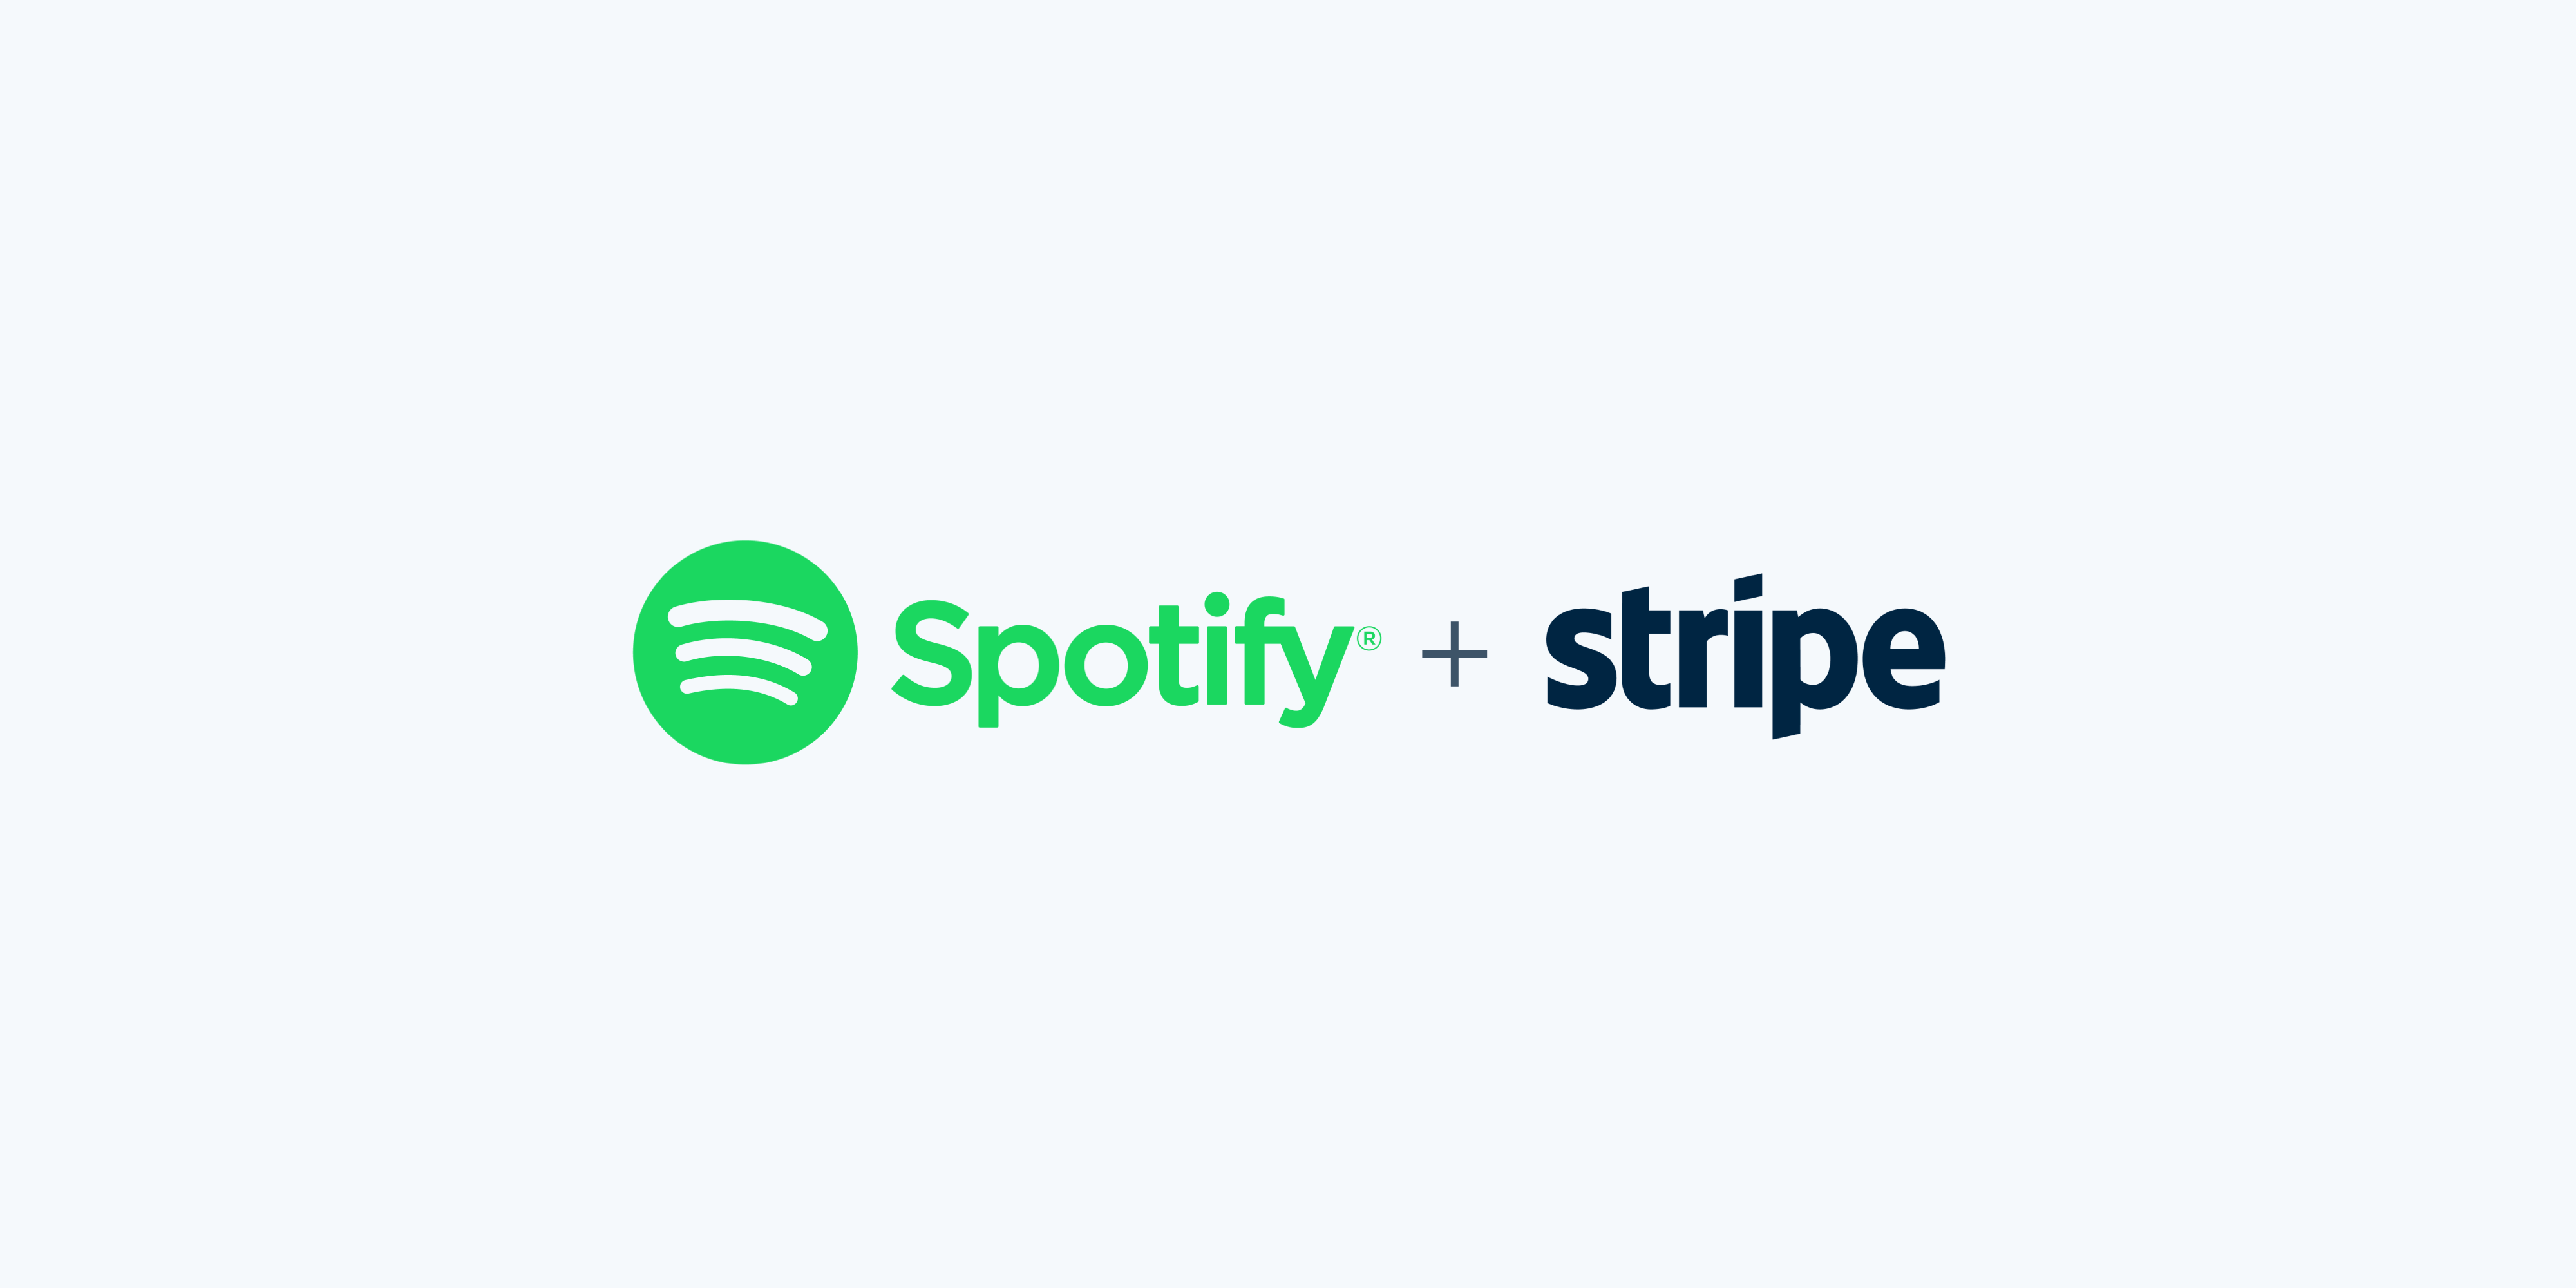 Spotify and Stripe